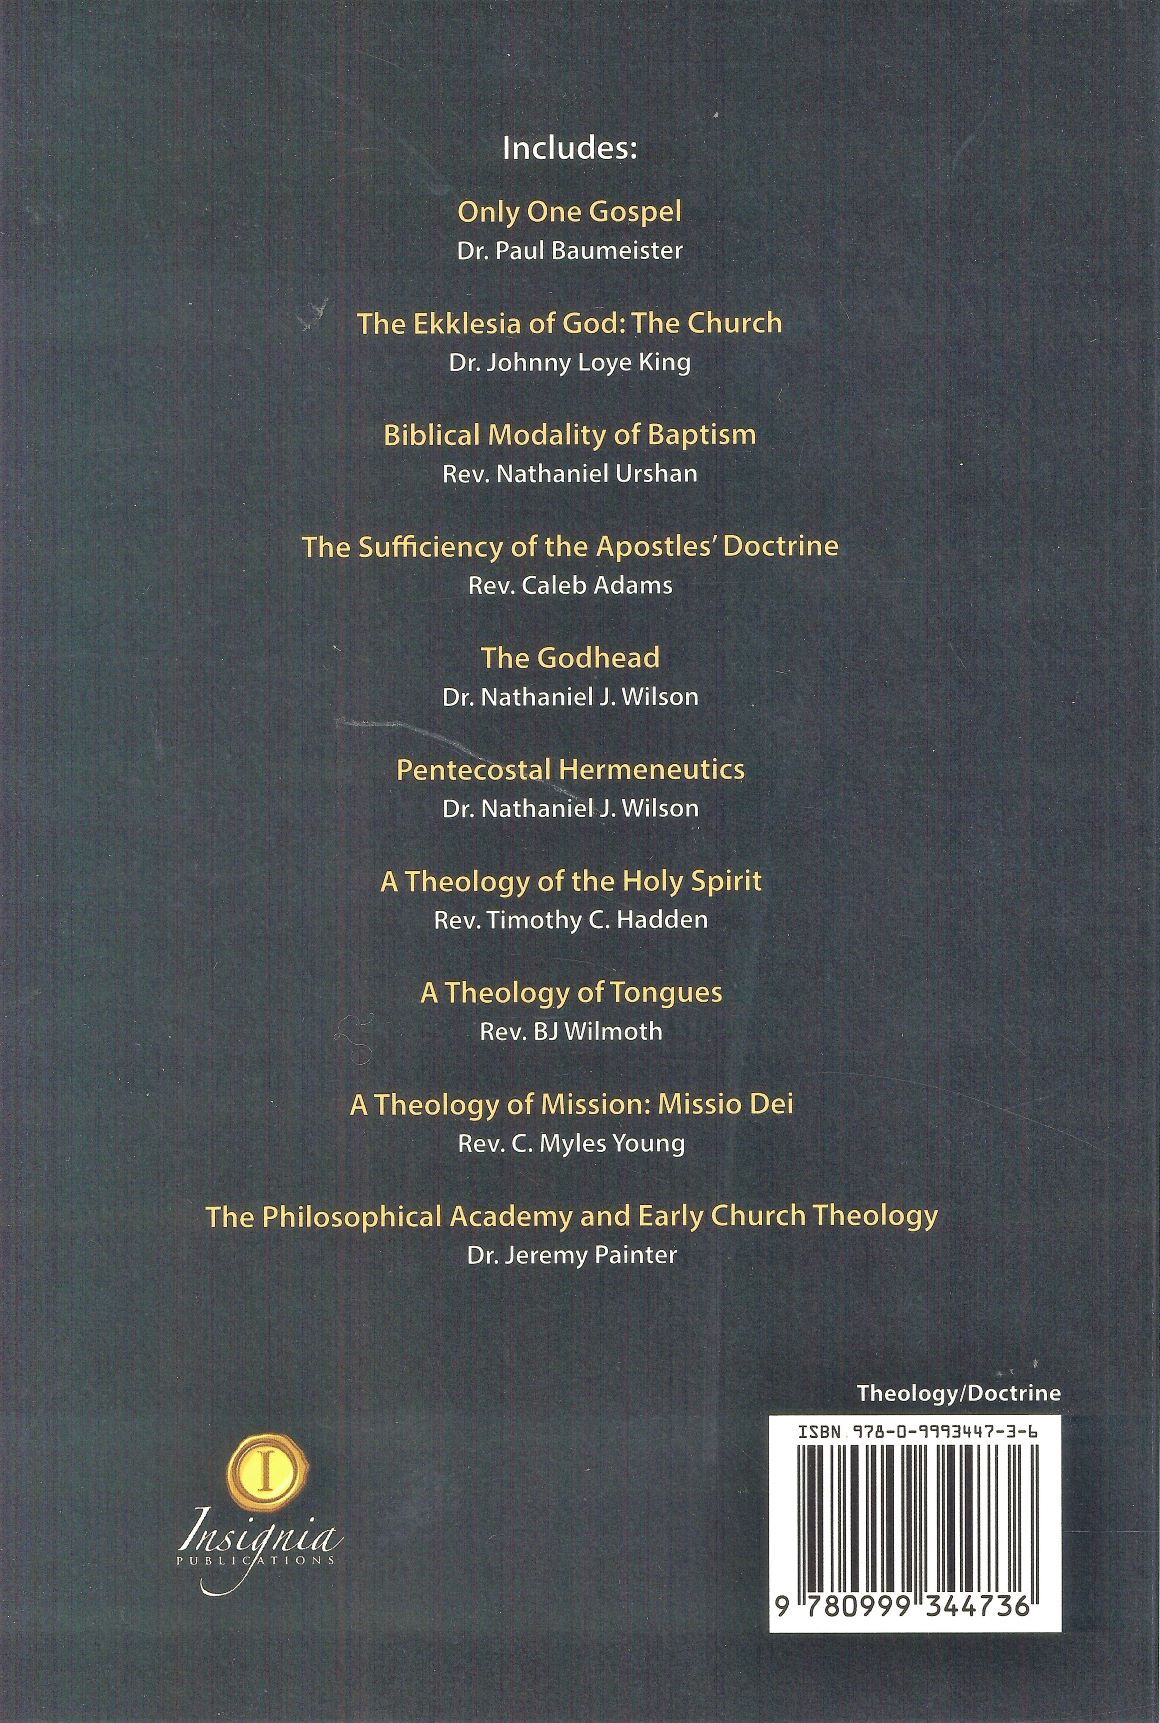 Symposium on the Apostles Doctrine Vol. 1 - Rick Mayo